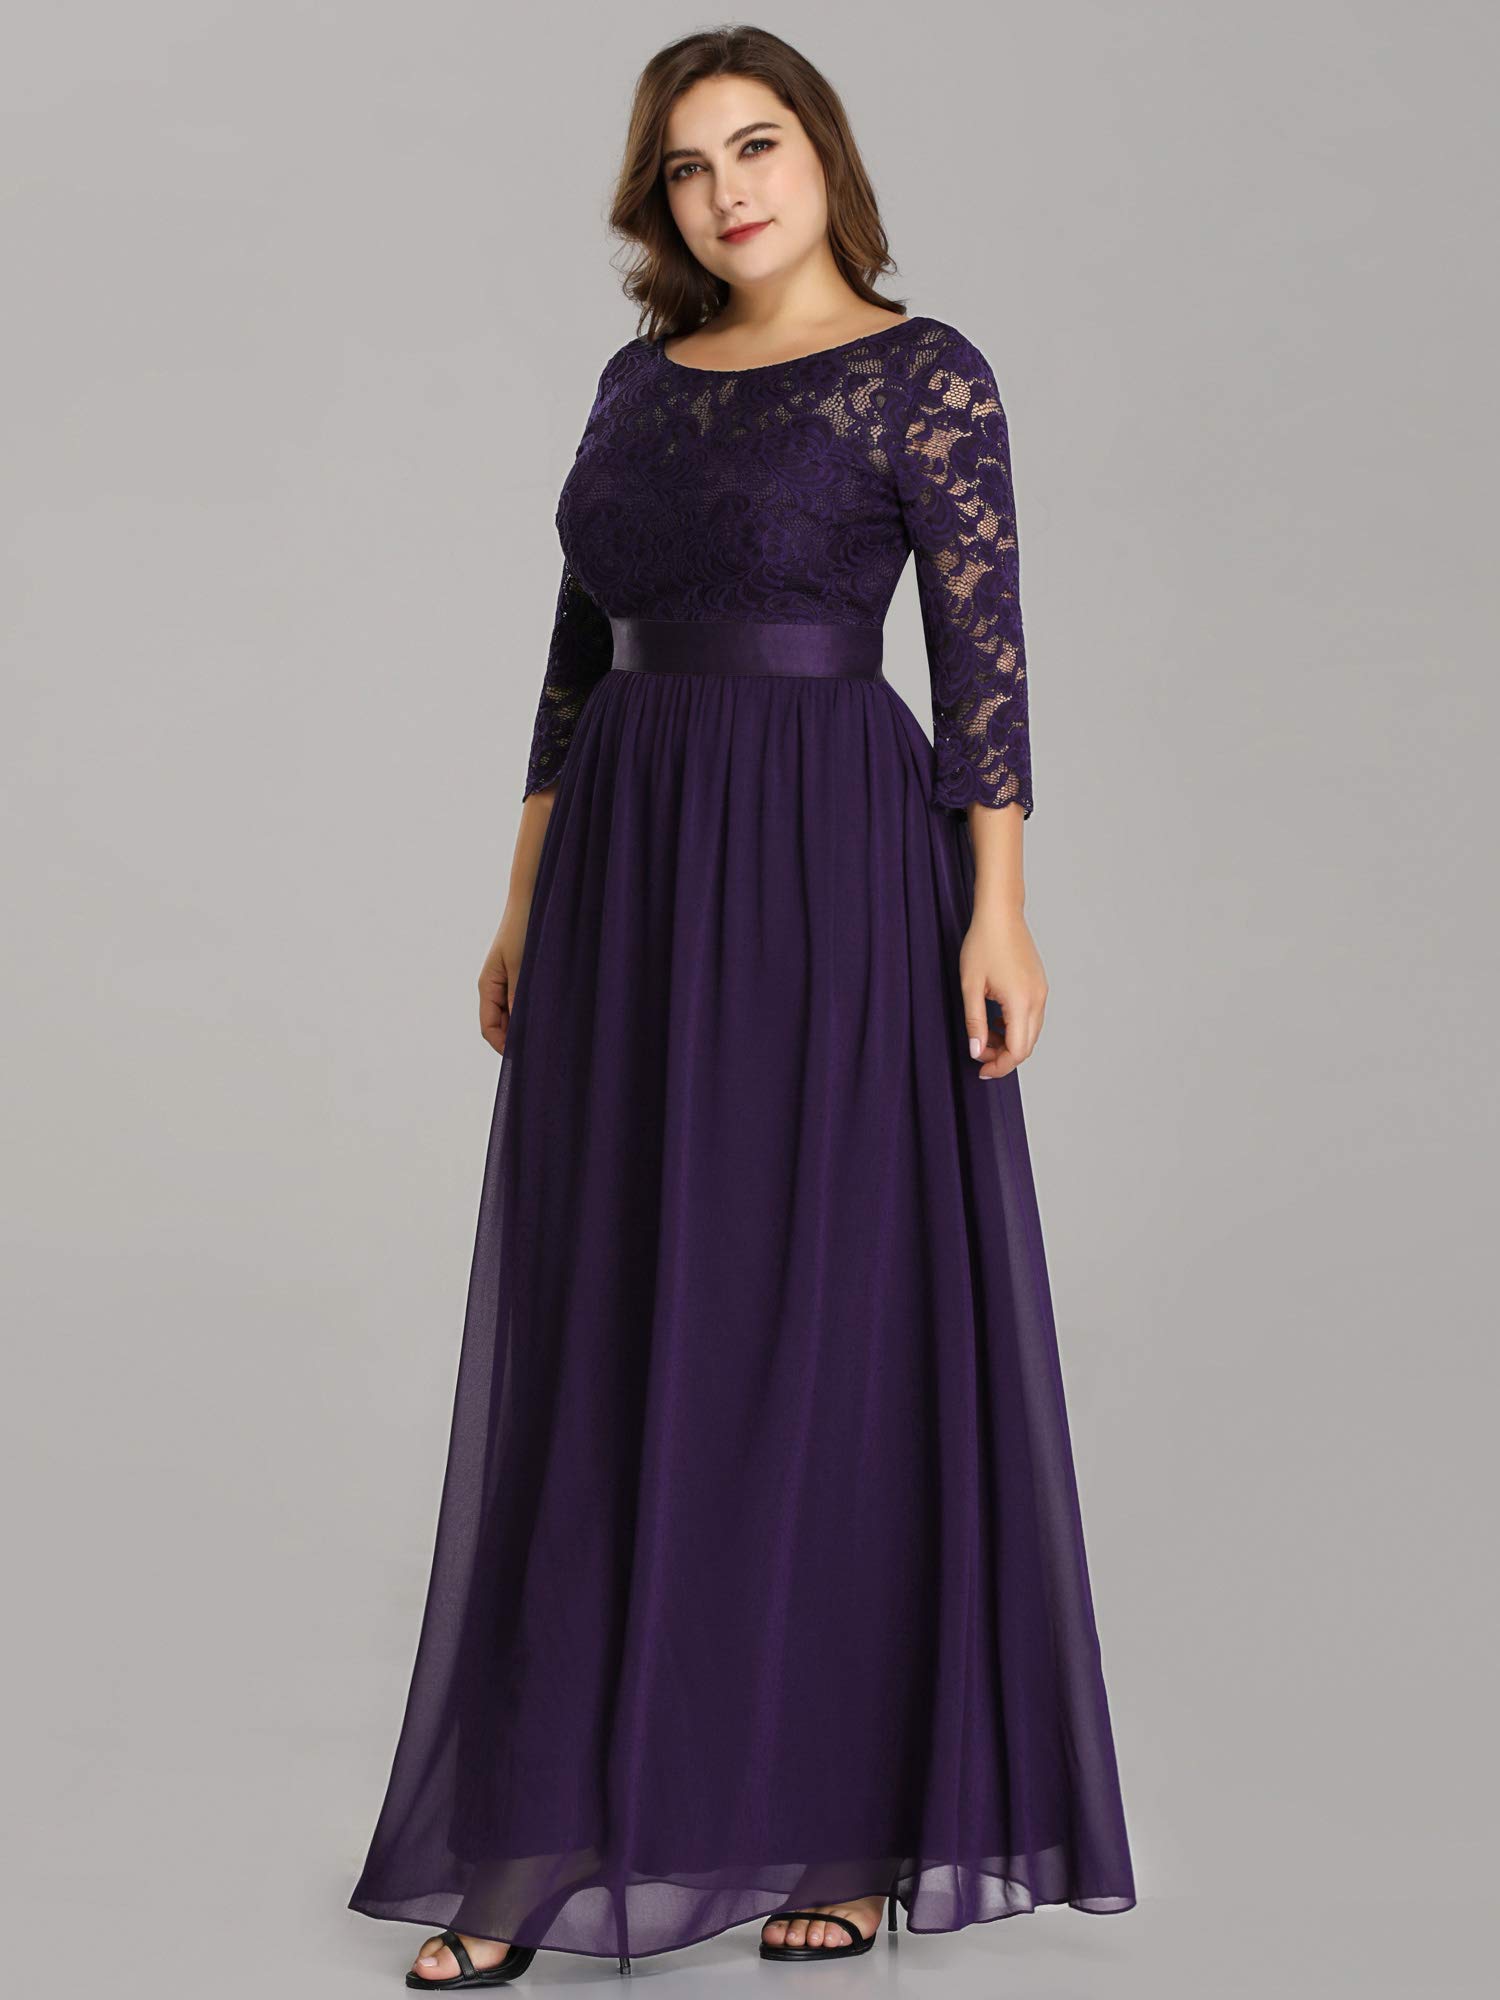 Ever-Pretty Womens Plus Size Lace Evening Formal Dress Elegant Lace Dresses Dark Purple US 20